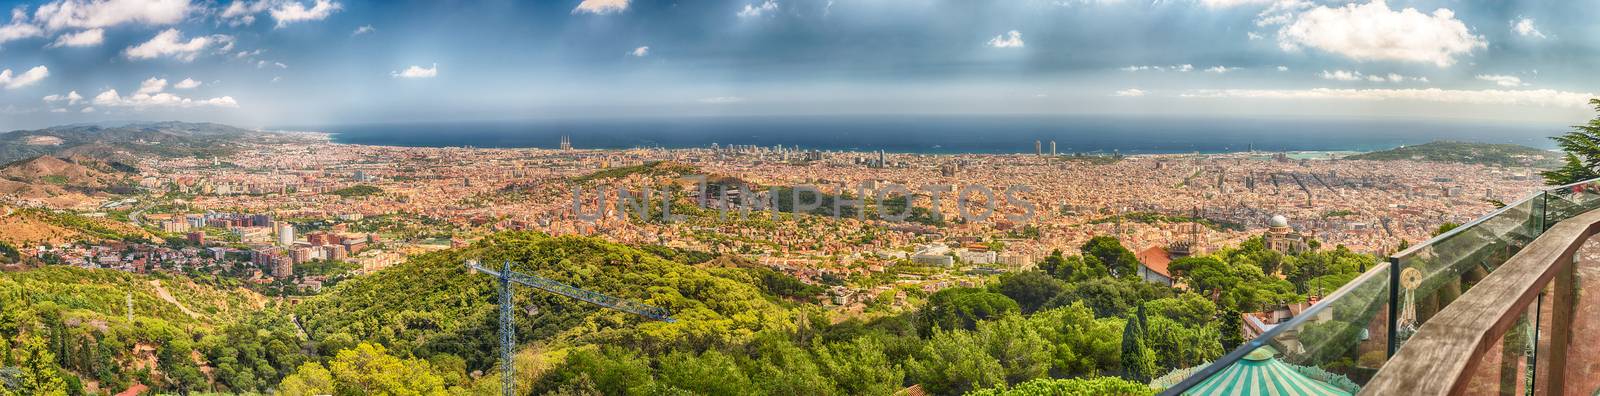 Panoramic view from Tibidabo mountain over Barcelona, Catalonia, by marcorubino